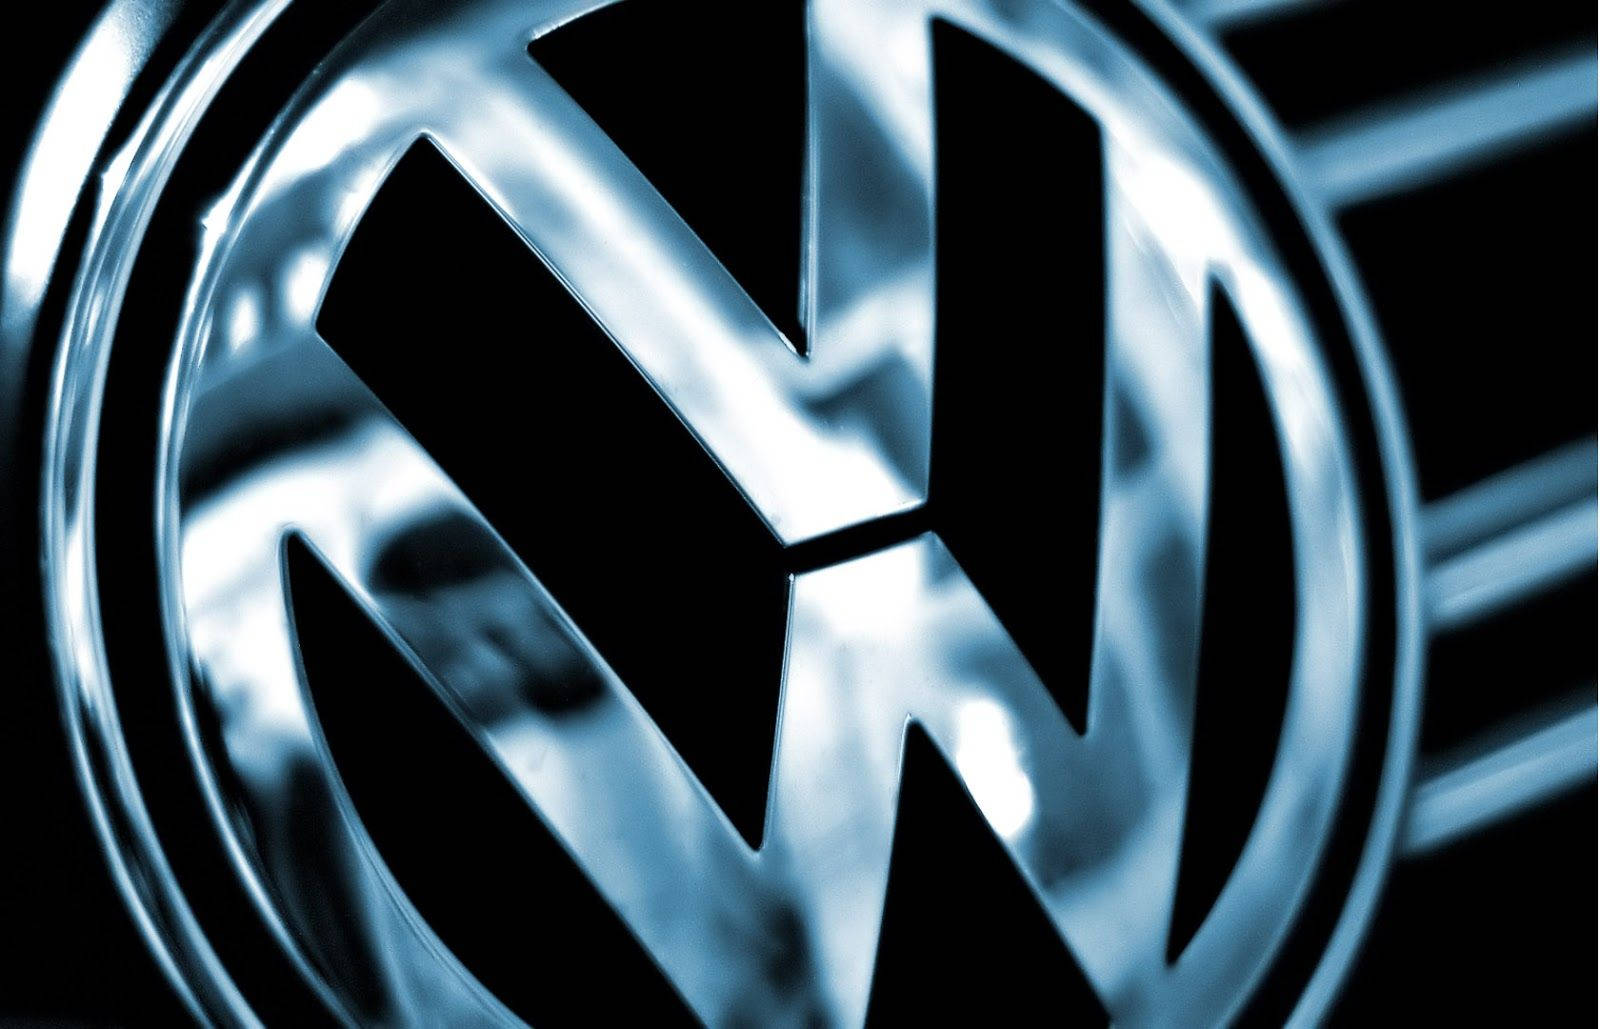 Volkswagen Wallpaper 1080p Q15ti4 Wallpaper